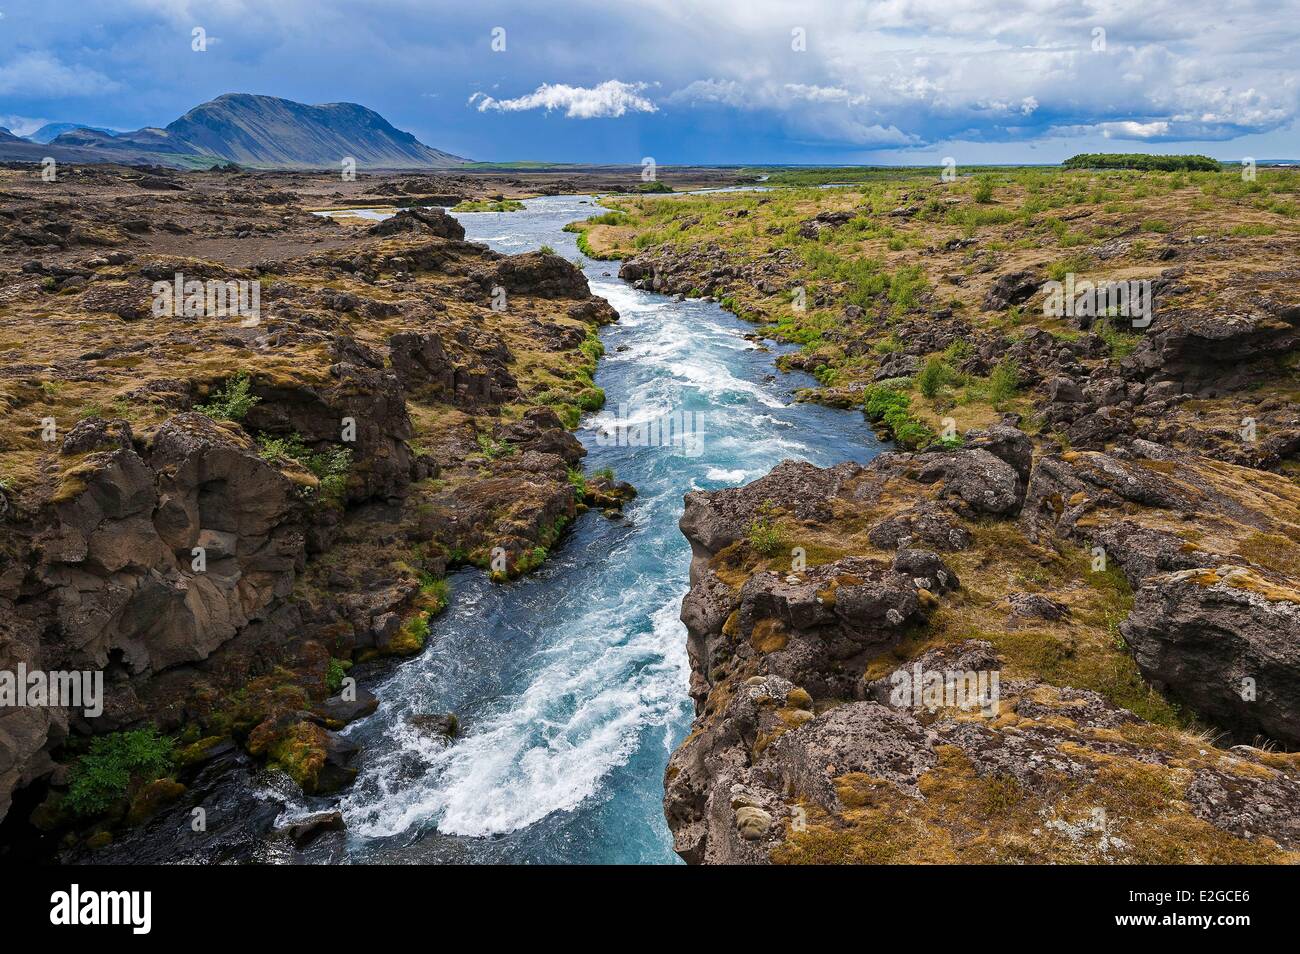 Iceland Sudurland Region around Hekla Volcano Stock Photo